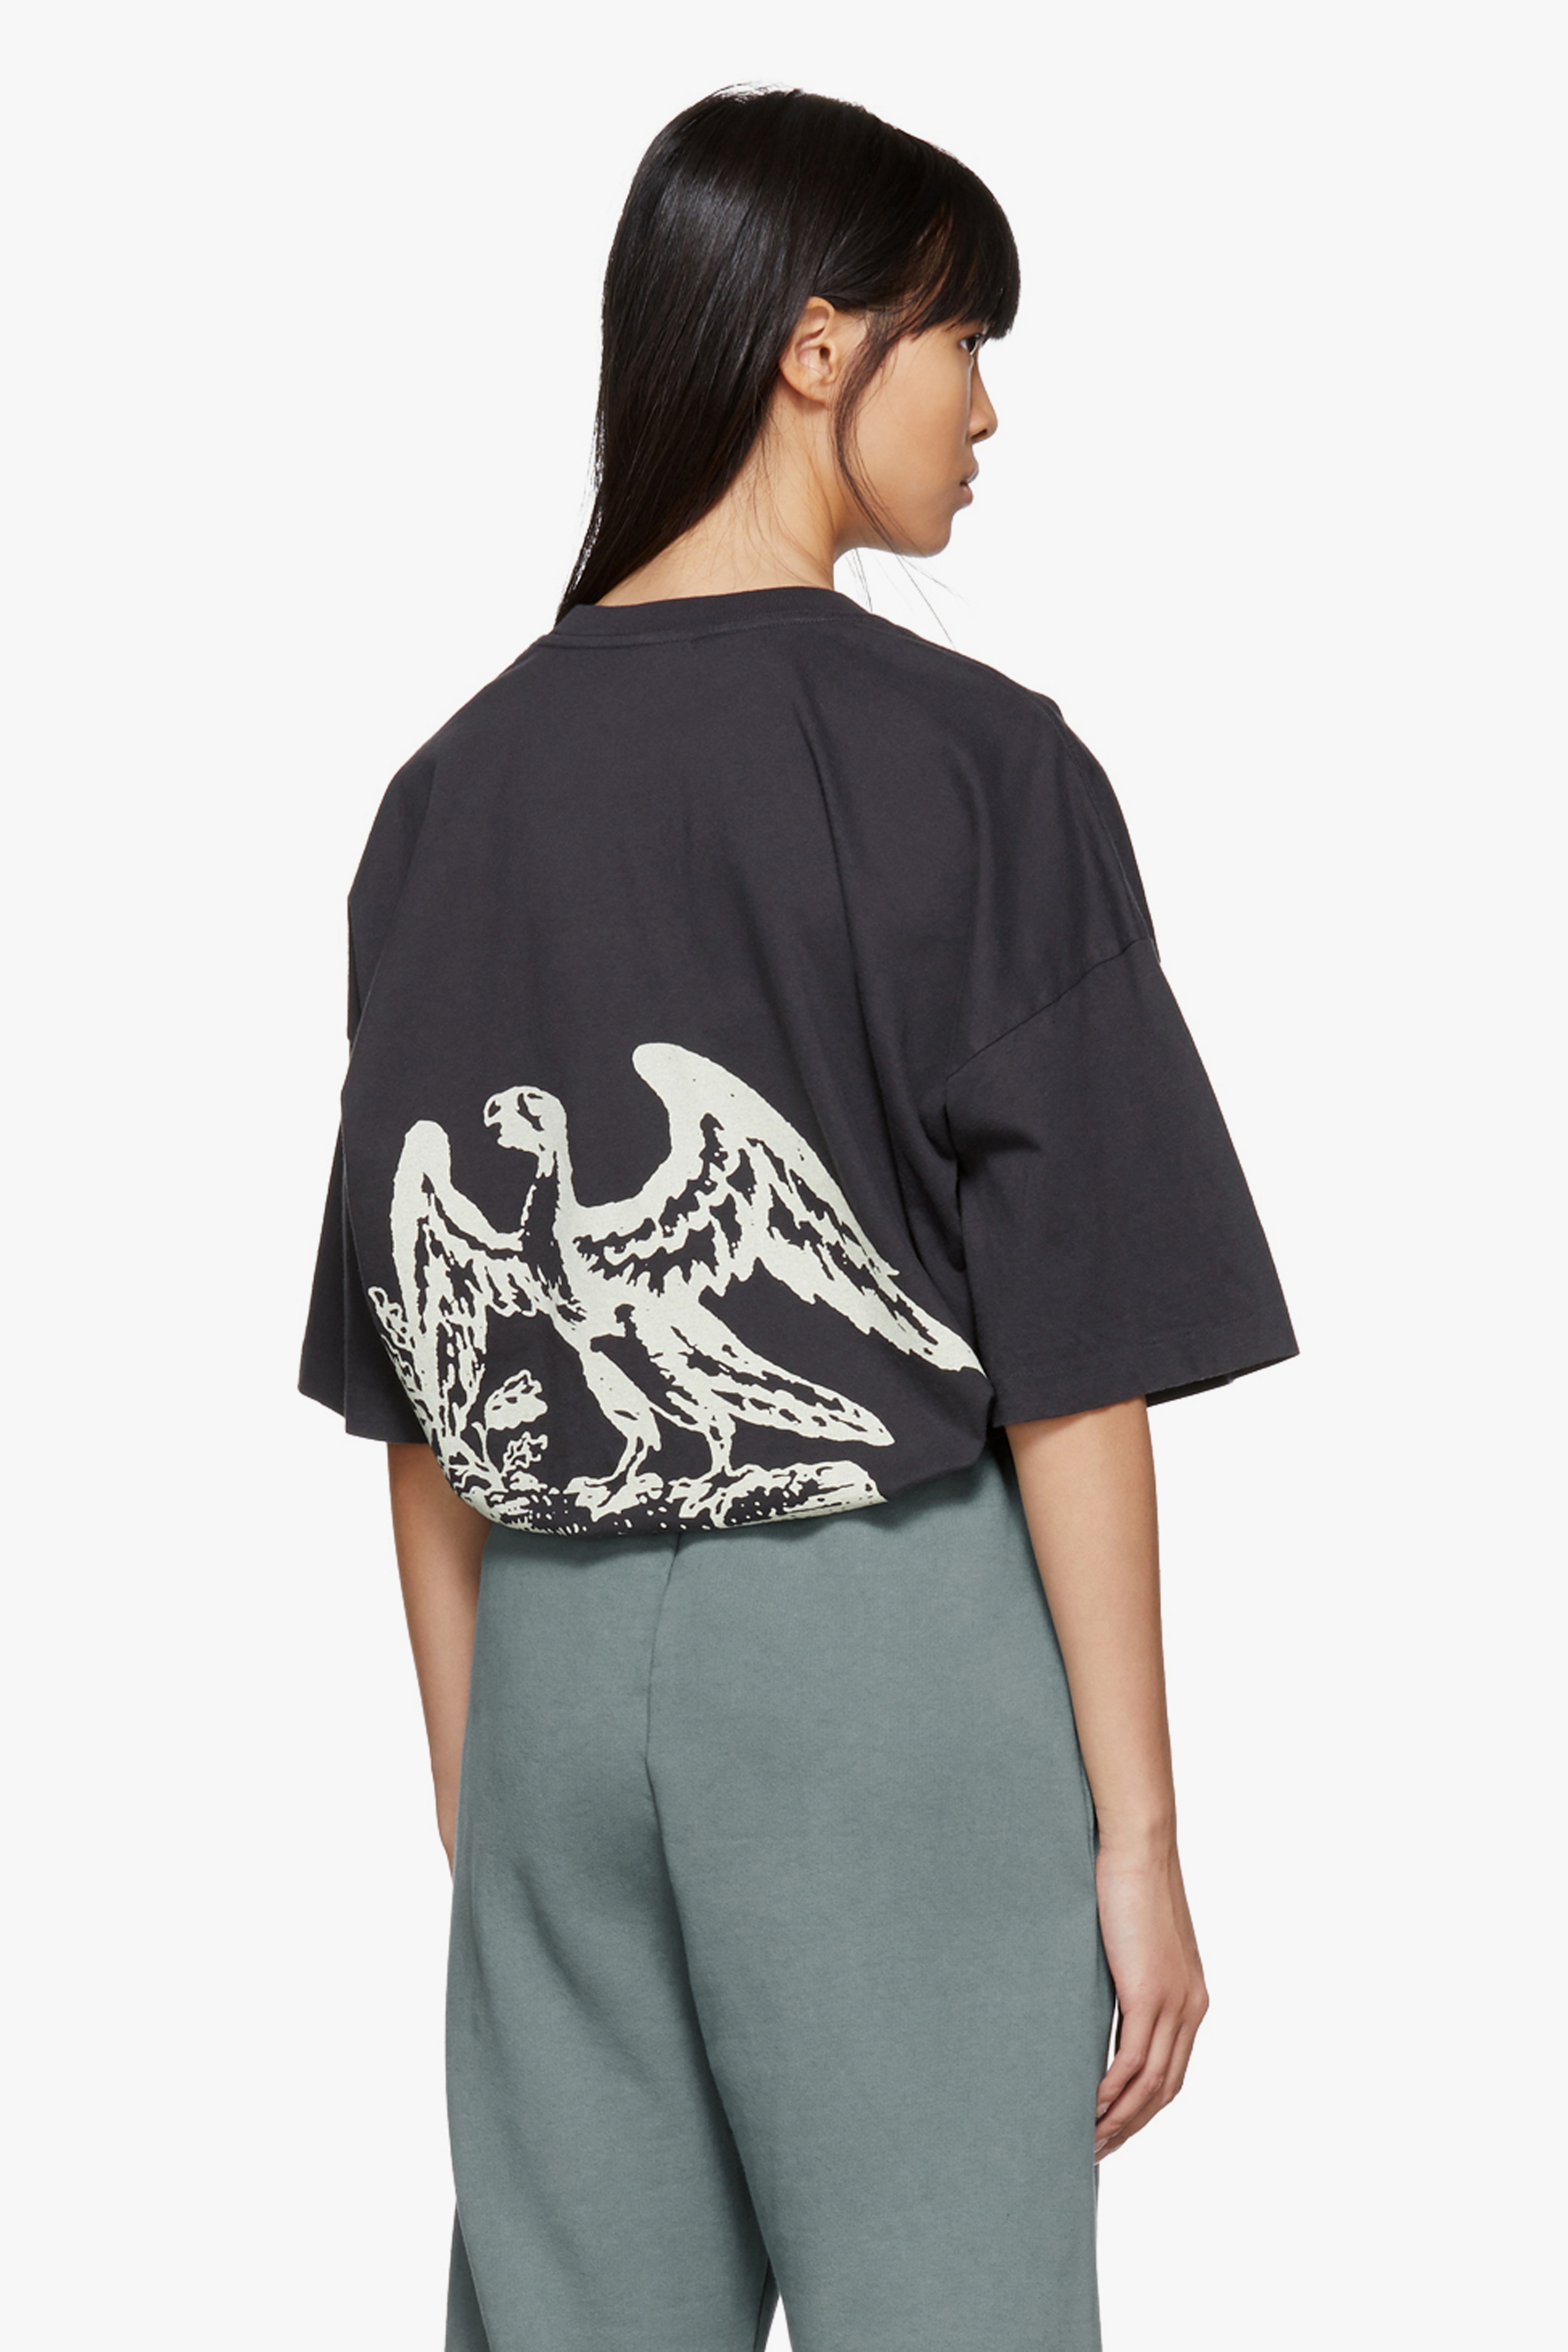 YEEZY Season Kanye West Collection SSENSE New T-Shirt Sweater Jacket adidas Originals Fashion